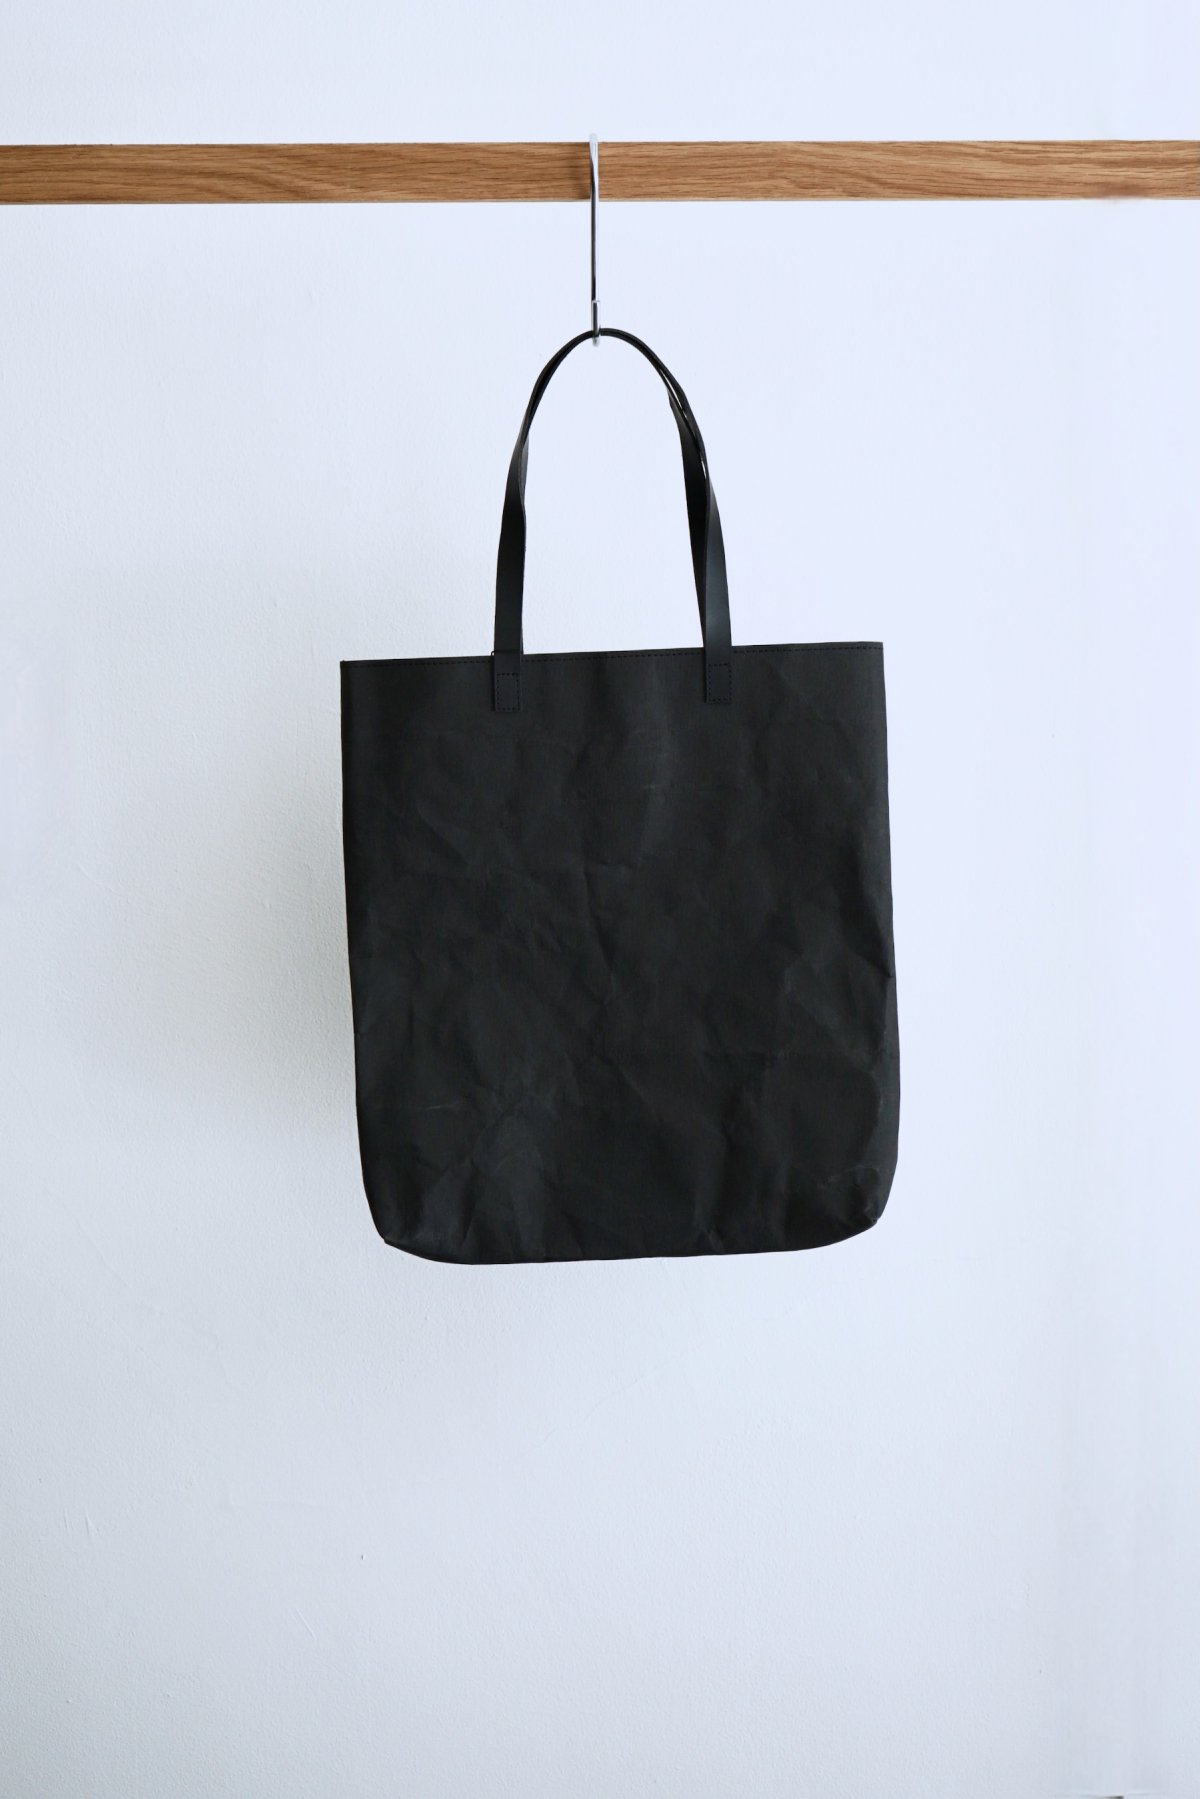 papier langackerhäusl / Tote Bag / Black